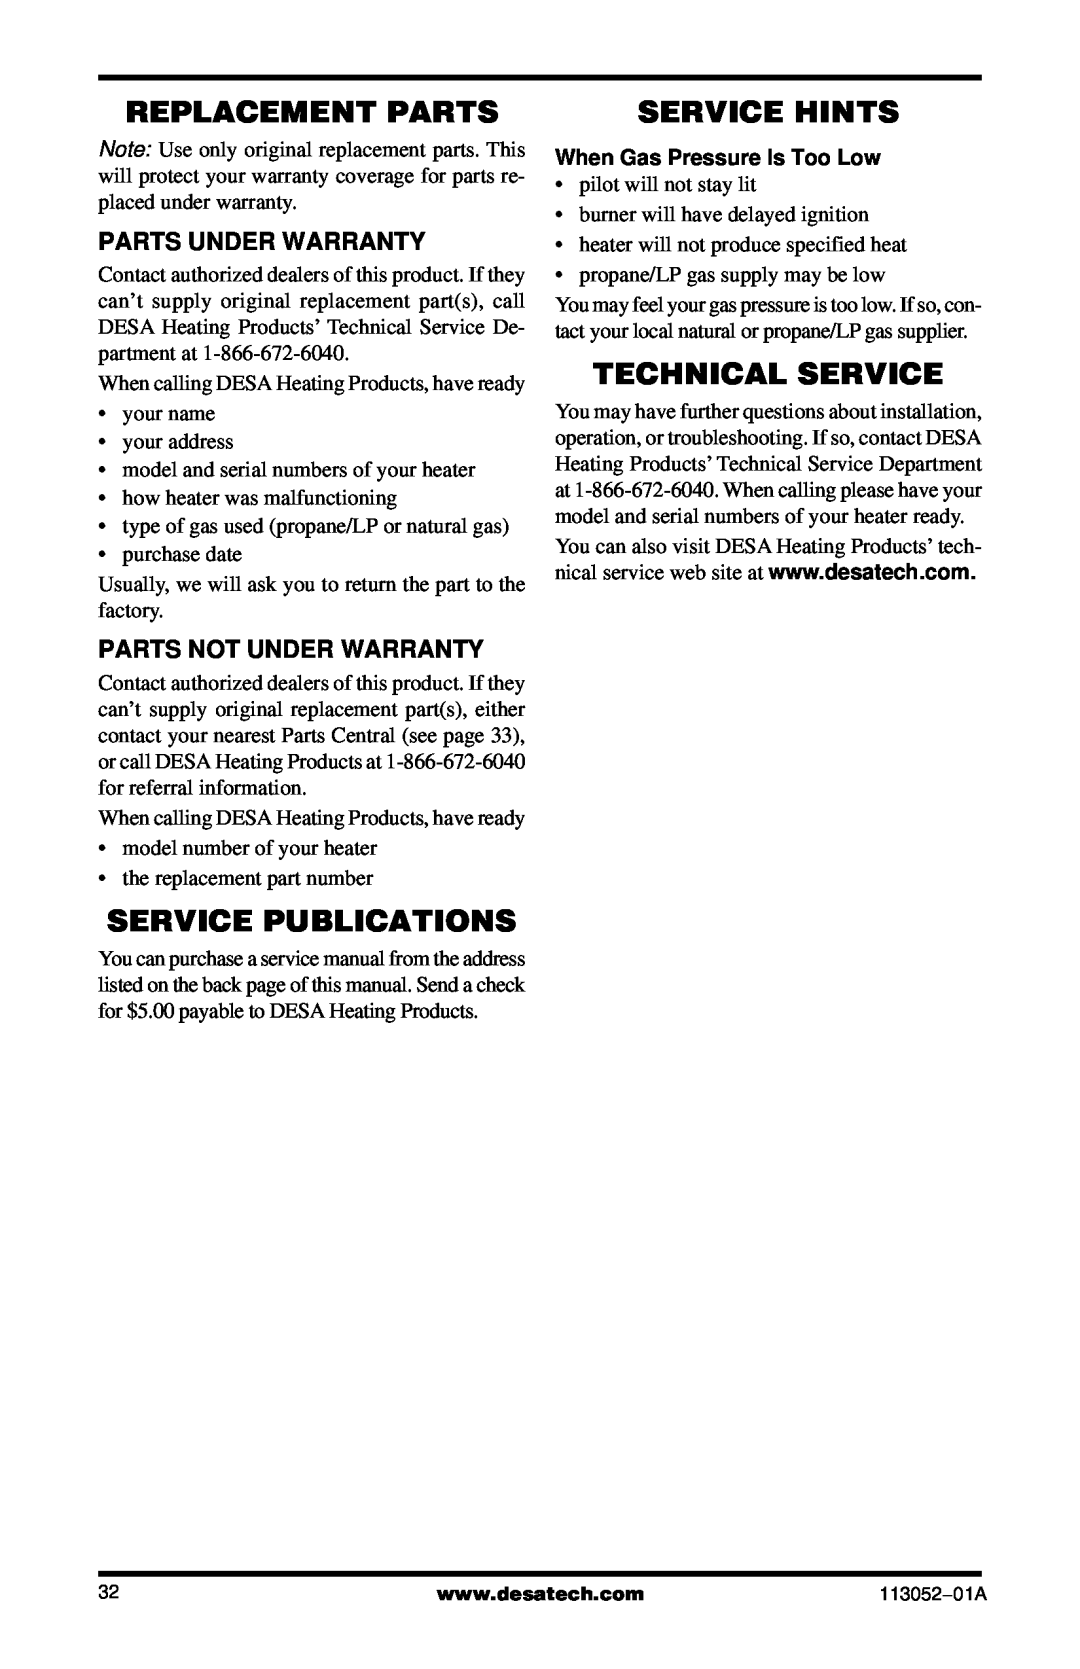 Vanguard Heating VP16TA Replacement Parts, Service Publications, Service Hints, Technical Service, Parts Under Warranty 